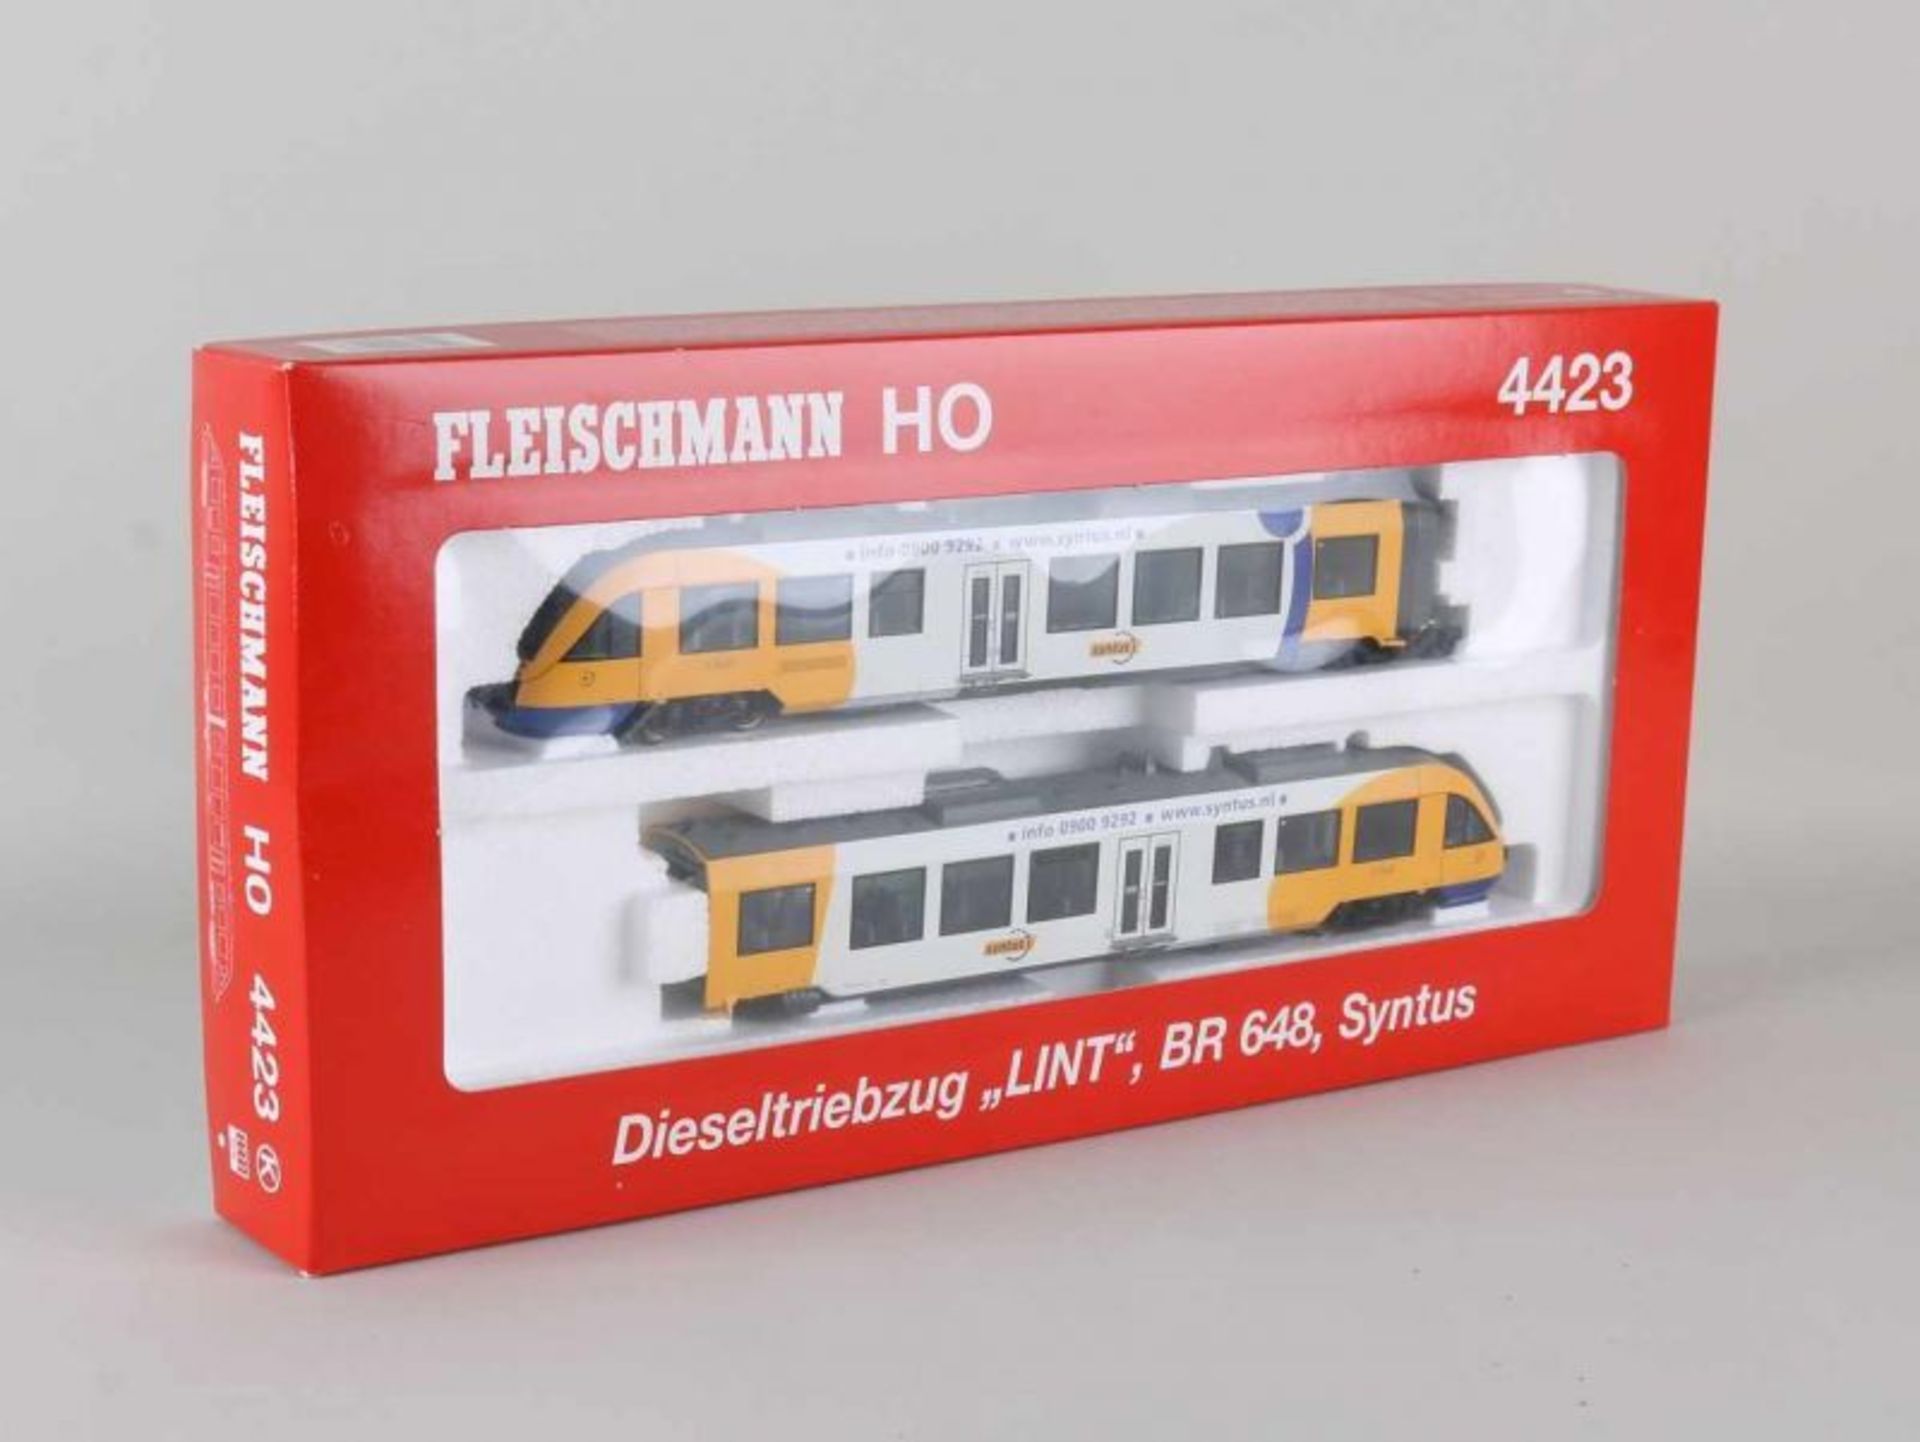 Fleischmann H0 4423, Syntus train set Lint "=, BR 648. In original box and in good condition "